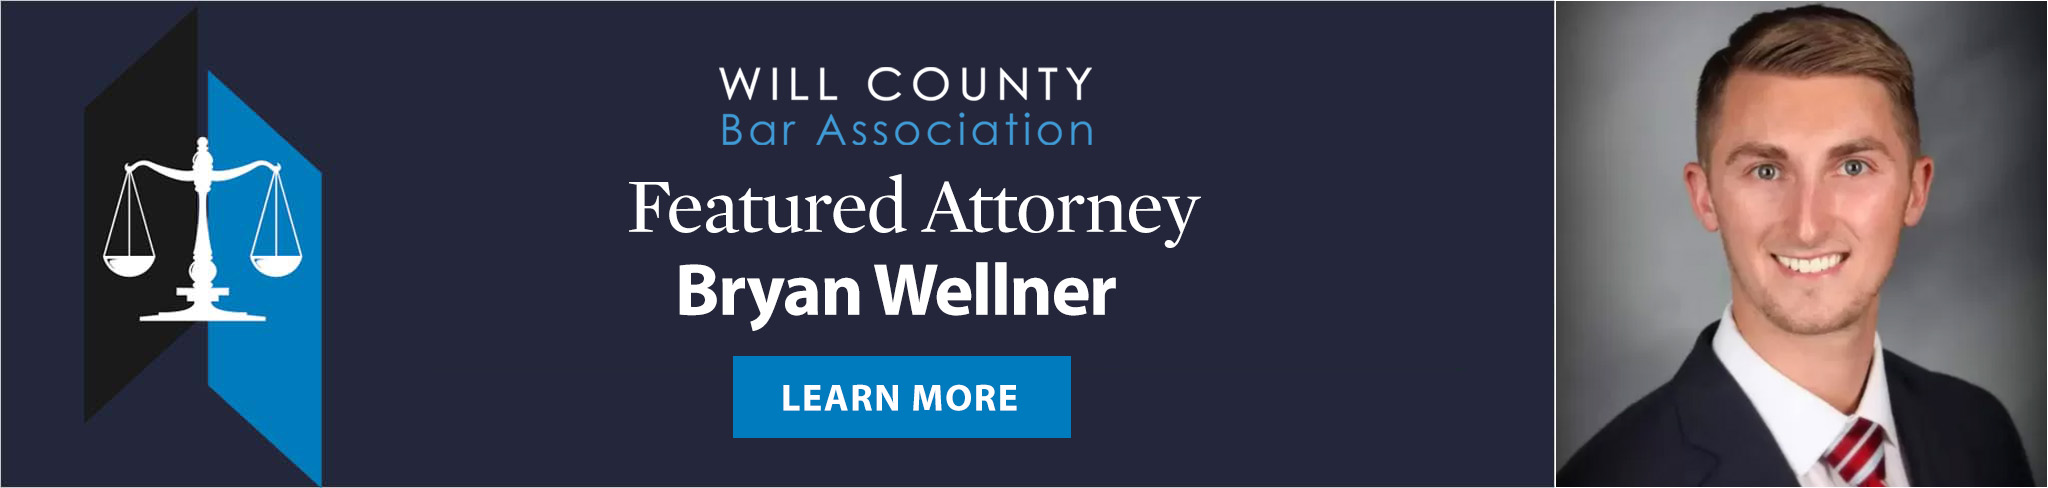 Featured attorney Bryan Wellner read more